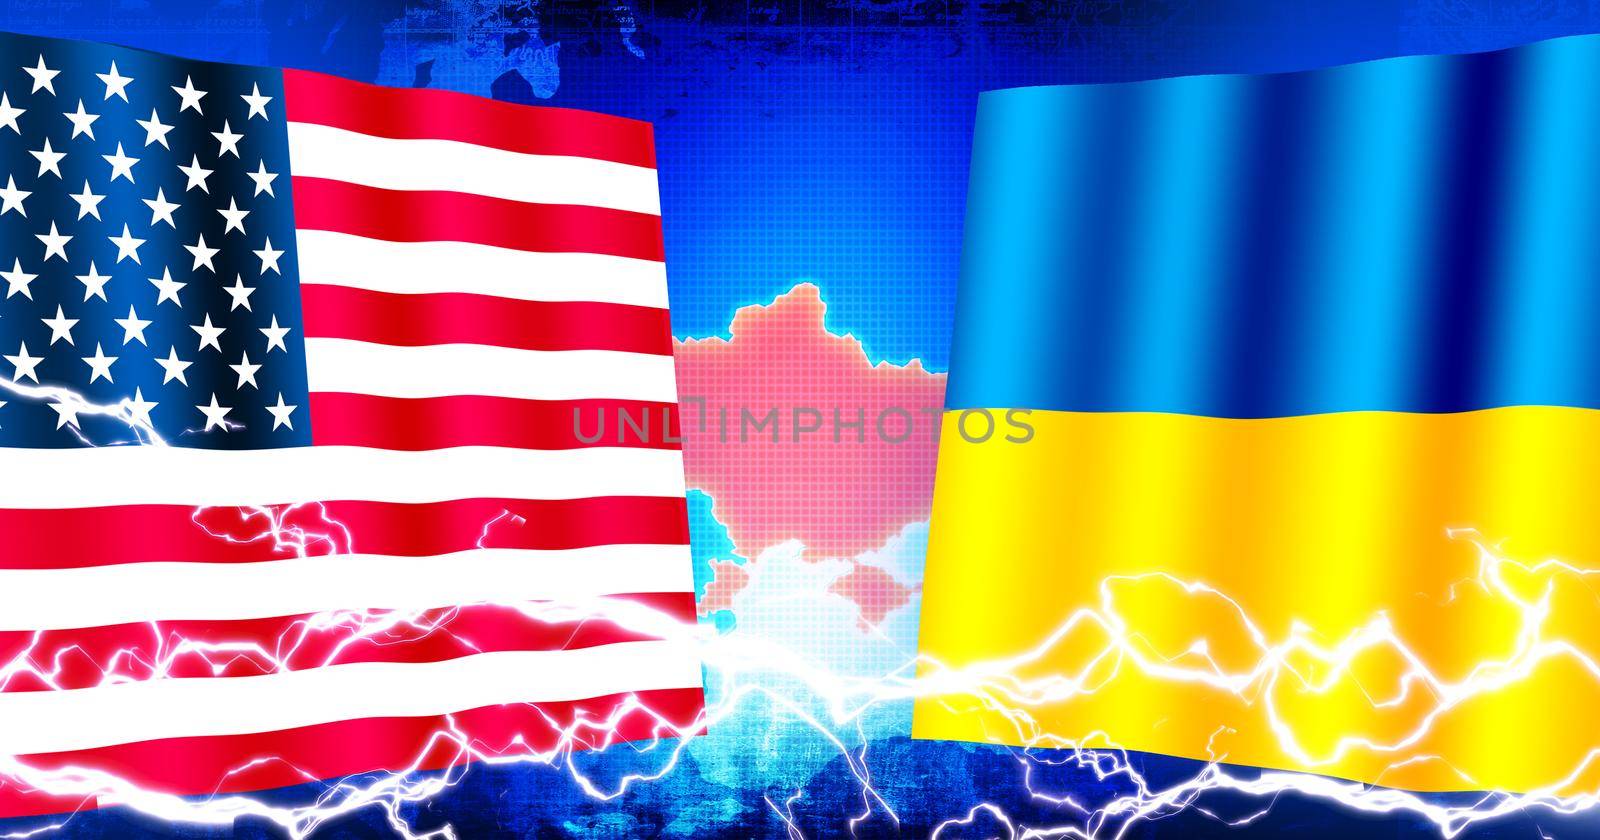 USA vs Ukraine (Russo-Ukrainian War ). Web banner illustration by barks